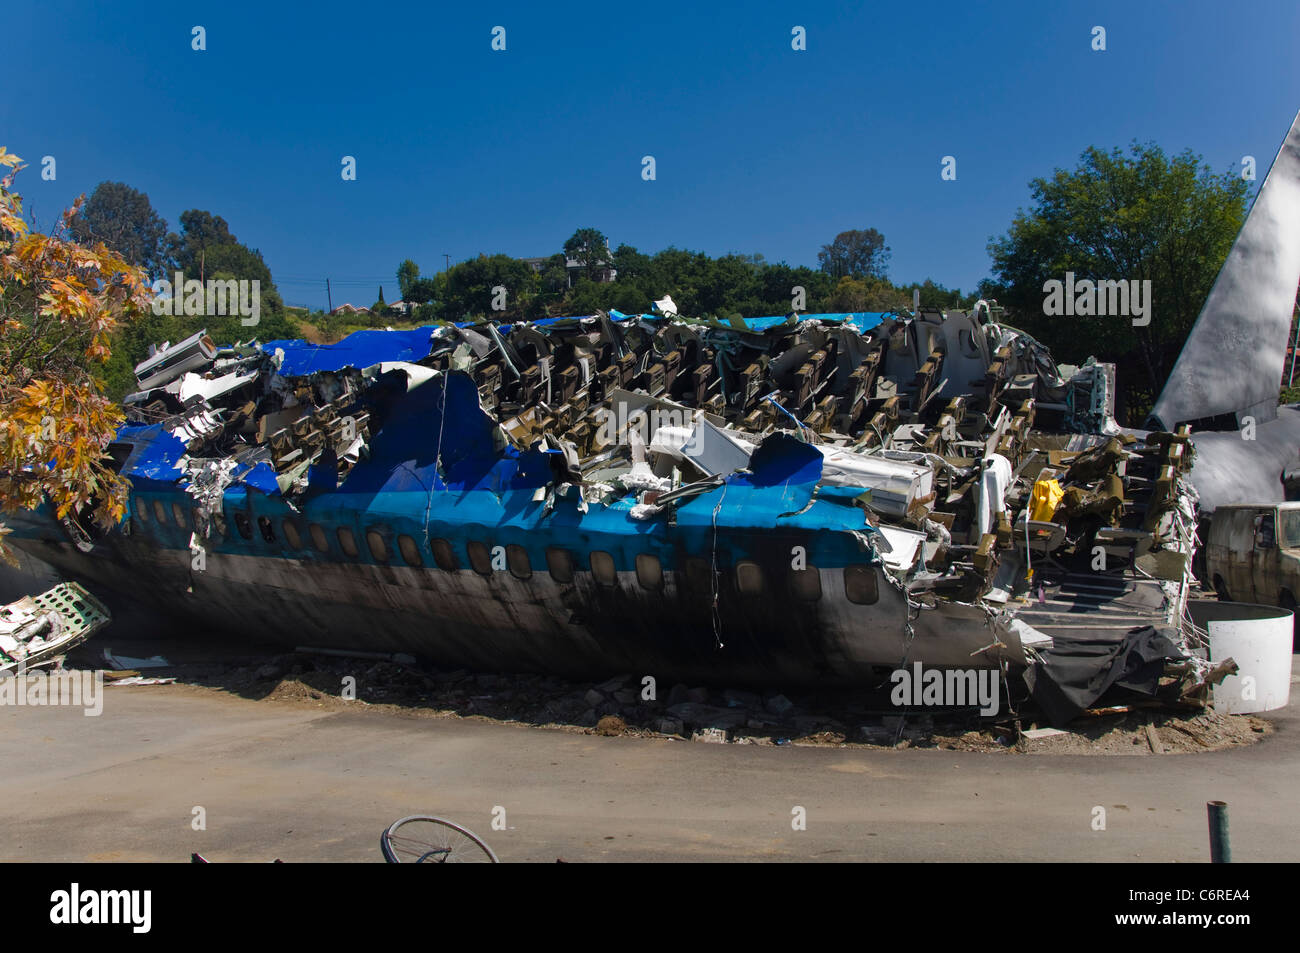 Battle Creek air show Jet Truck crash